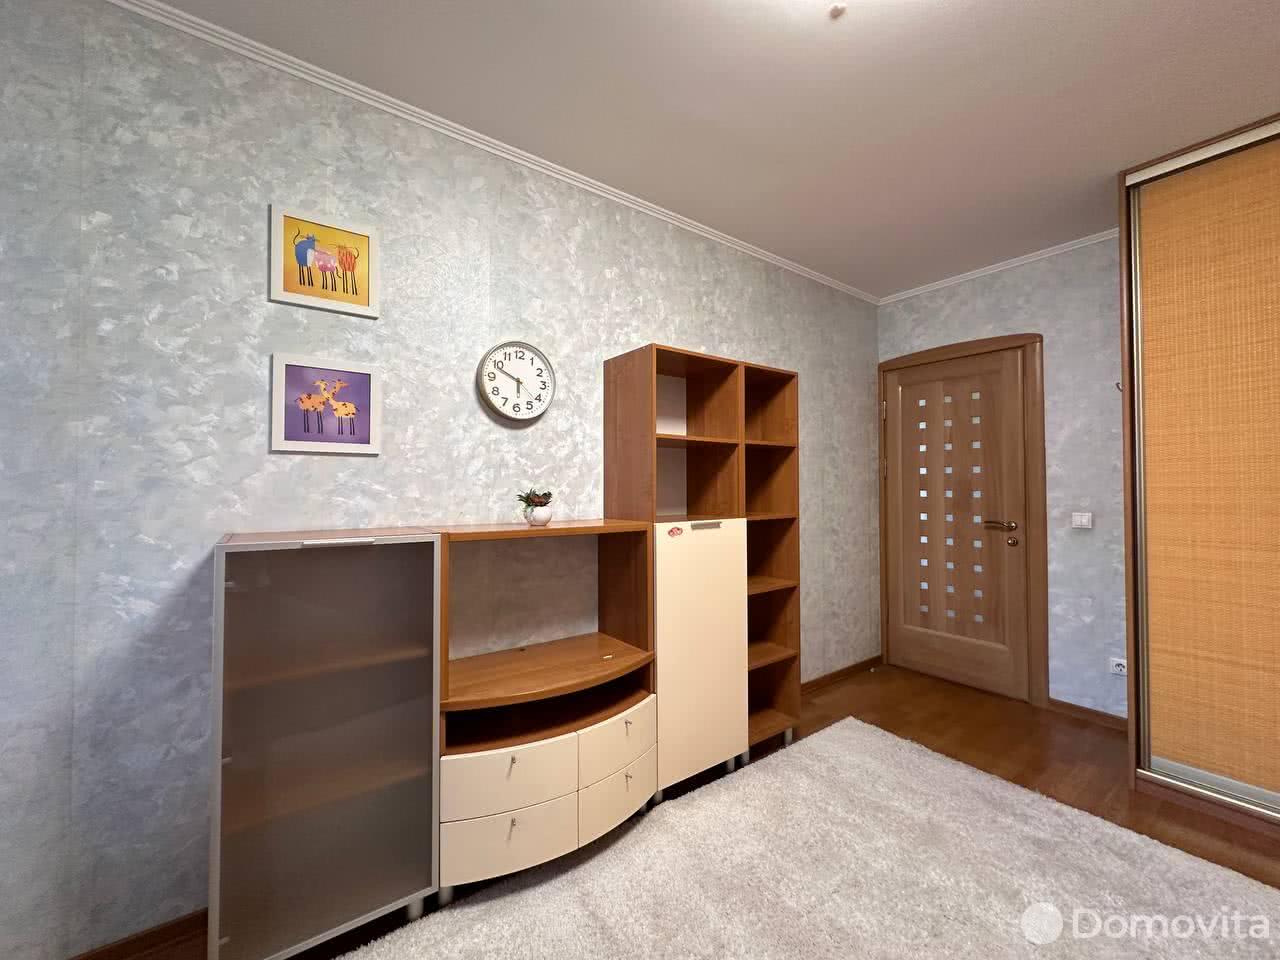 Стоимость аренды квартиры, Минск, ул. Сурганова, д. 88